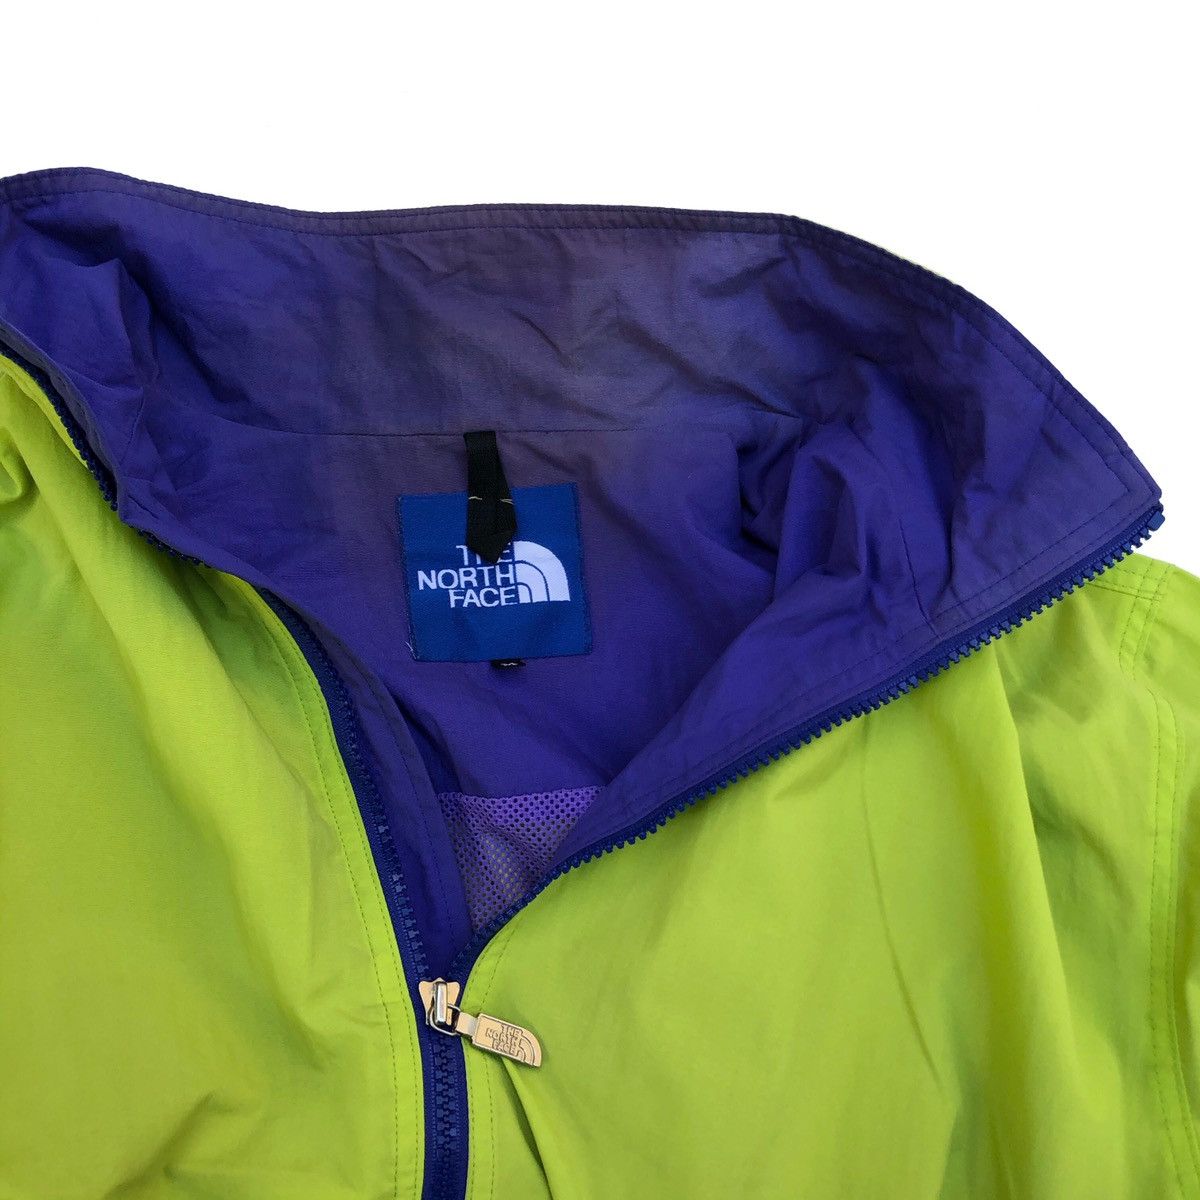 ❄️THE NORTH FACE Neon Green Windbreaker Zip Jacket - 6